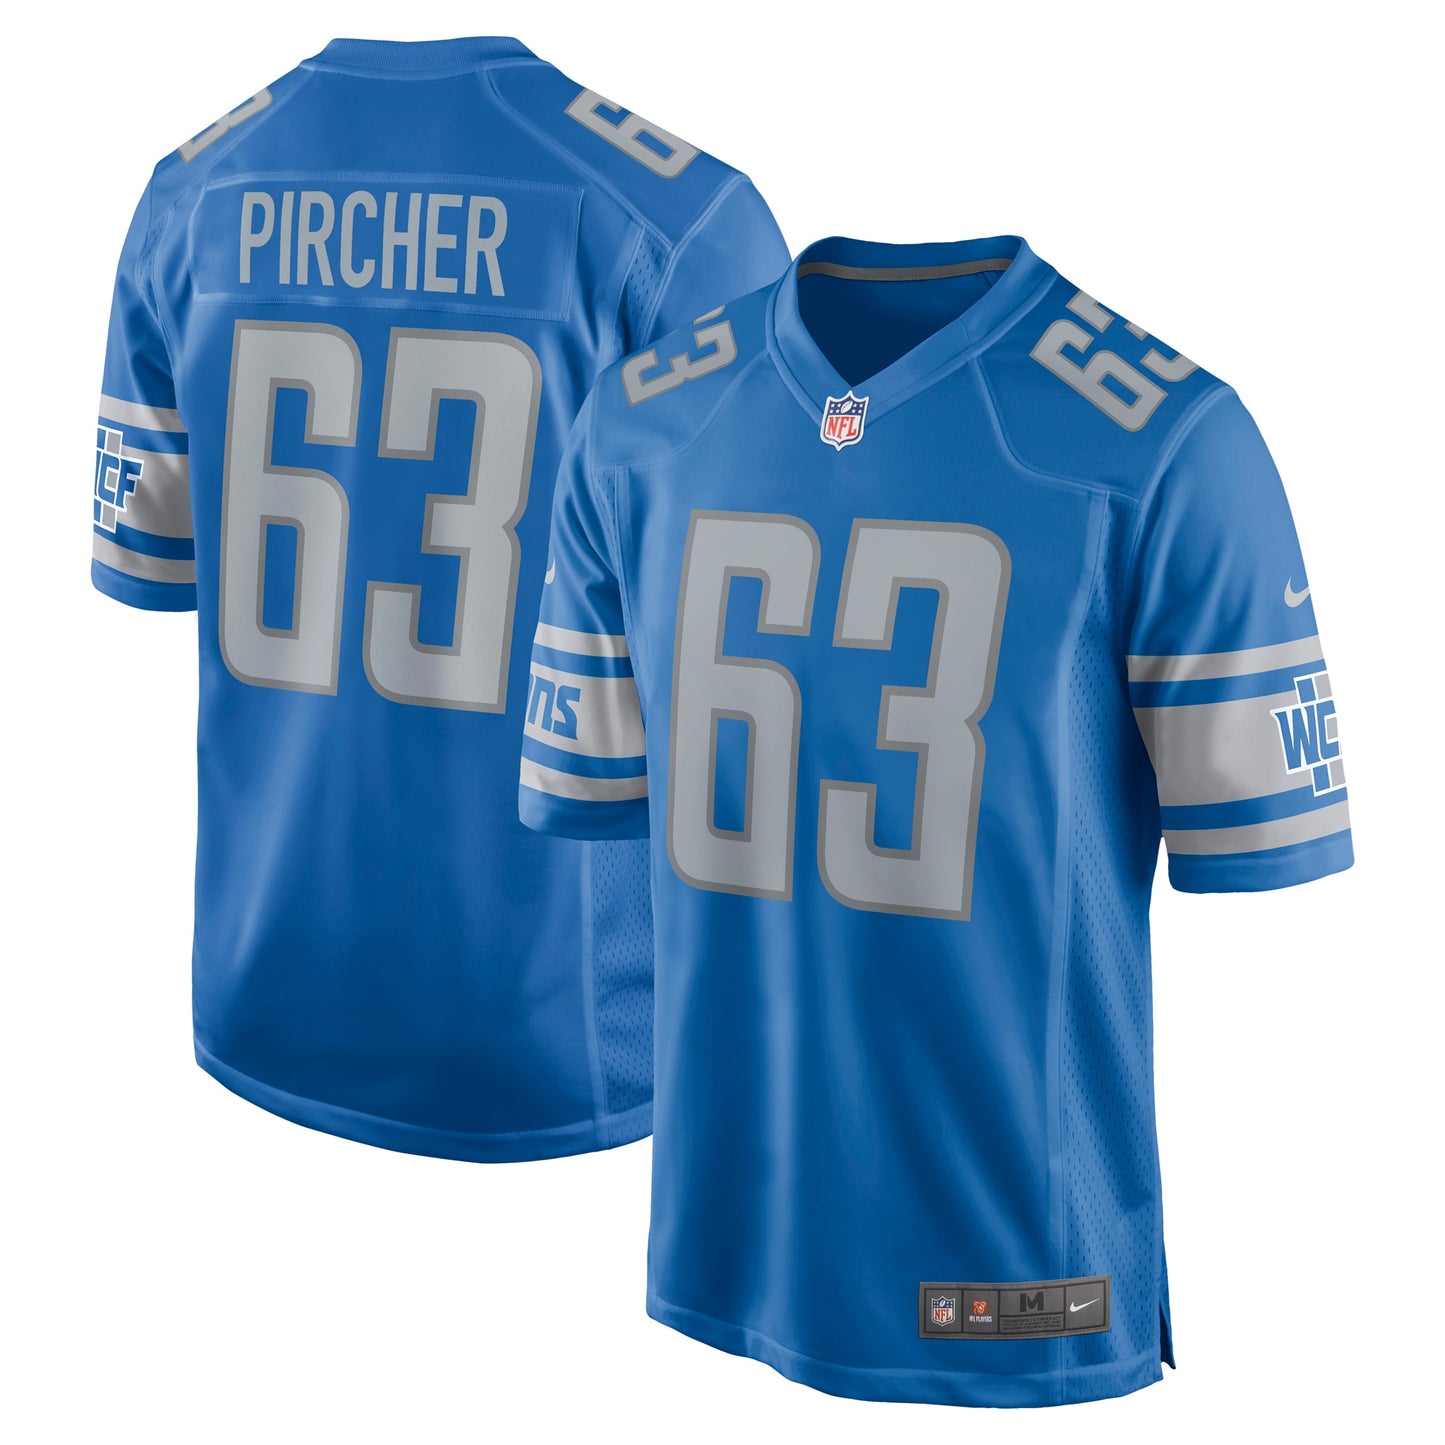 Max Pircher Detroit Lions Nike Team Game Jersey - Blue